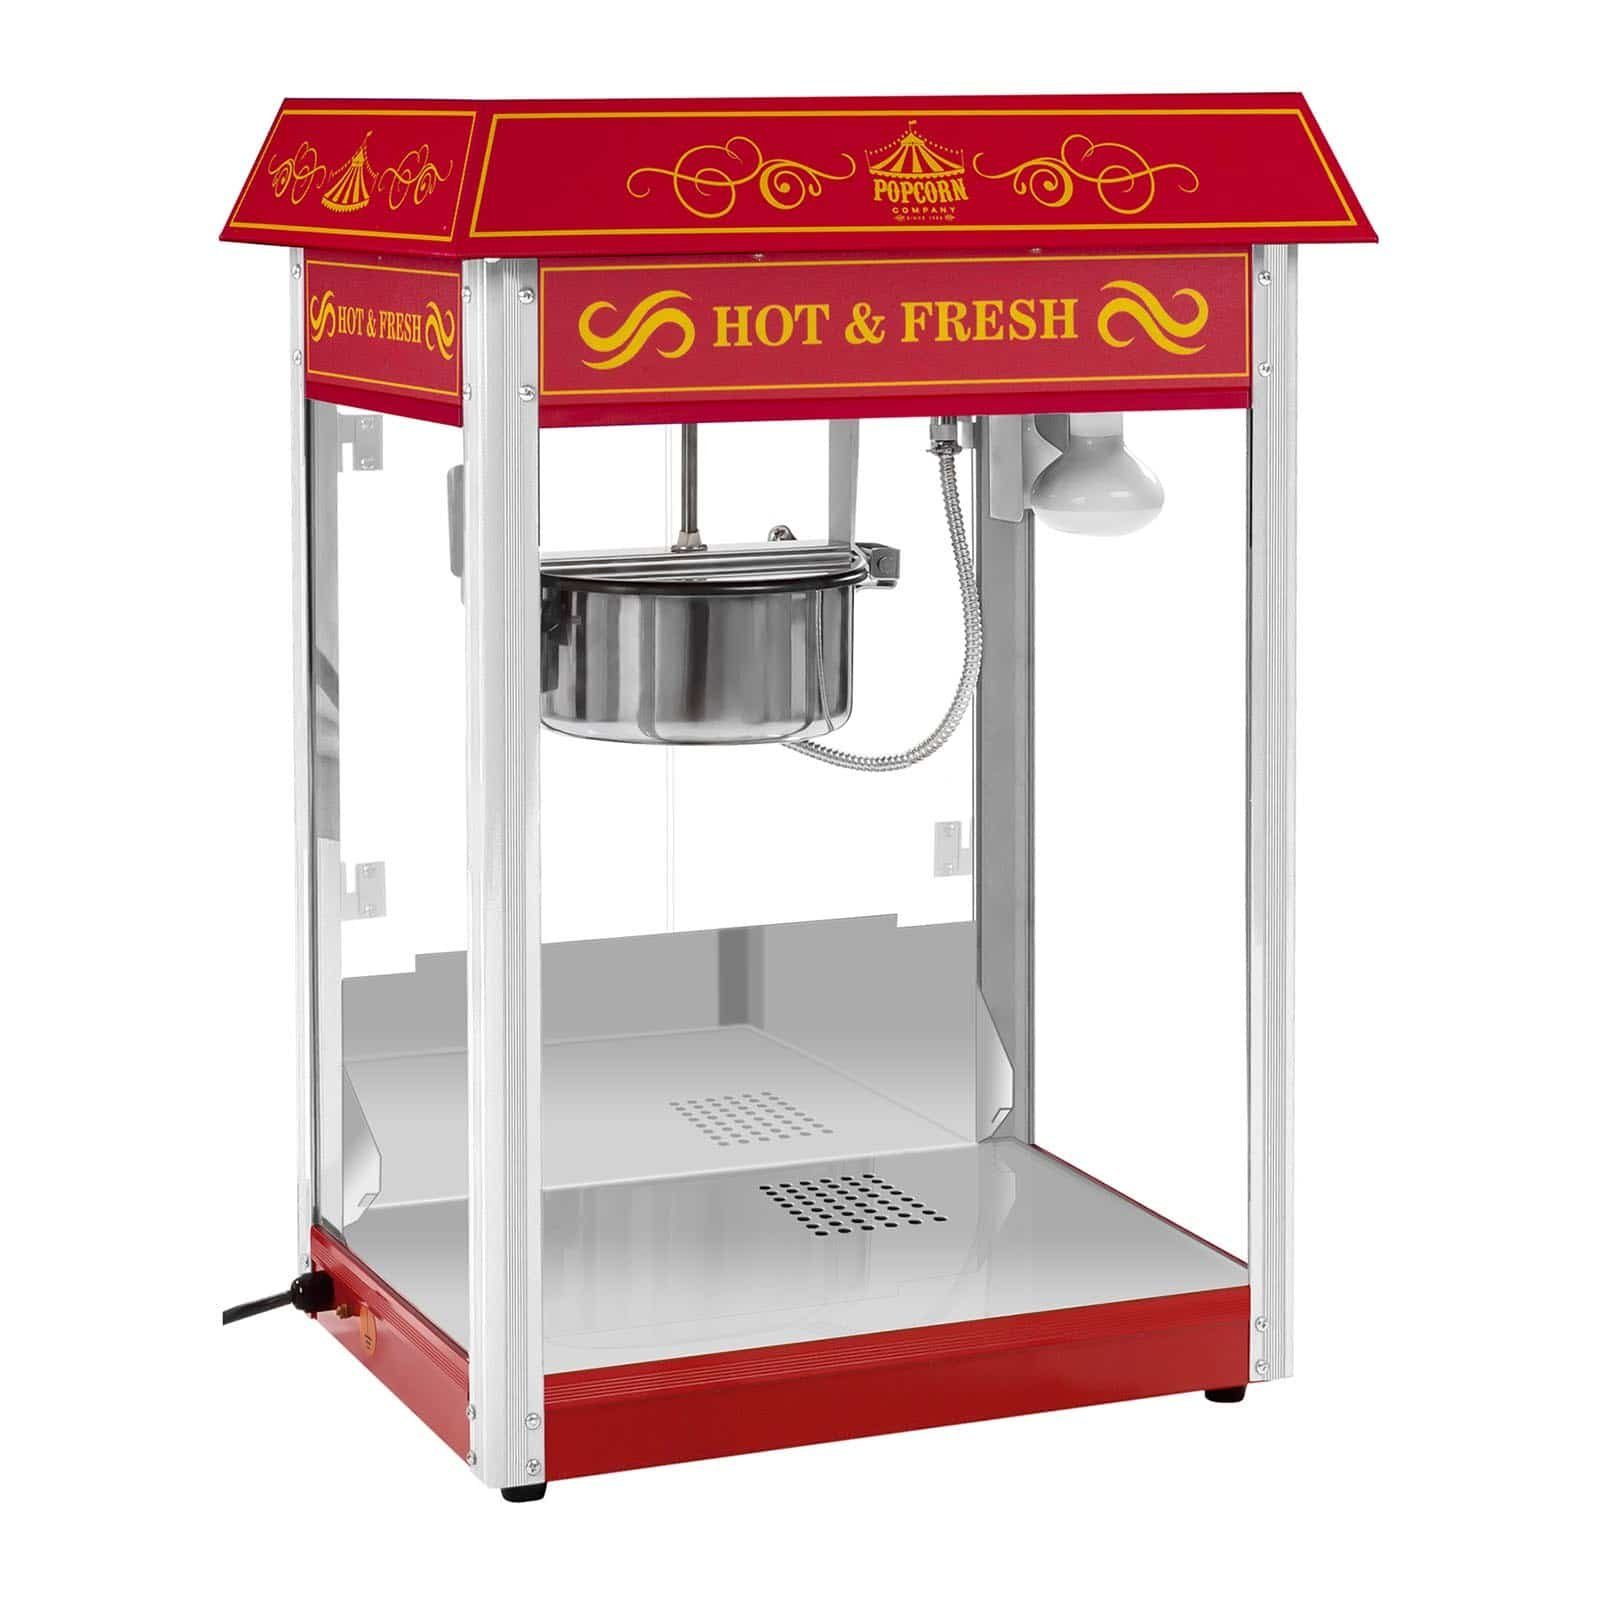 Royal Catering Popcorn Popcornmaschine Popcornmaschine Design Popcornautomat Maschine Popcornmaker Us